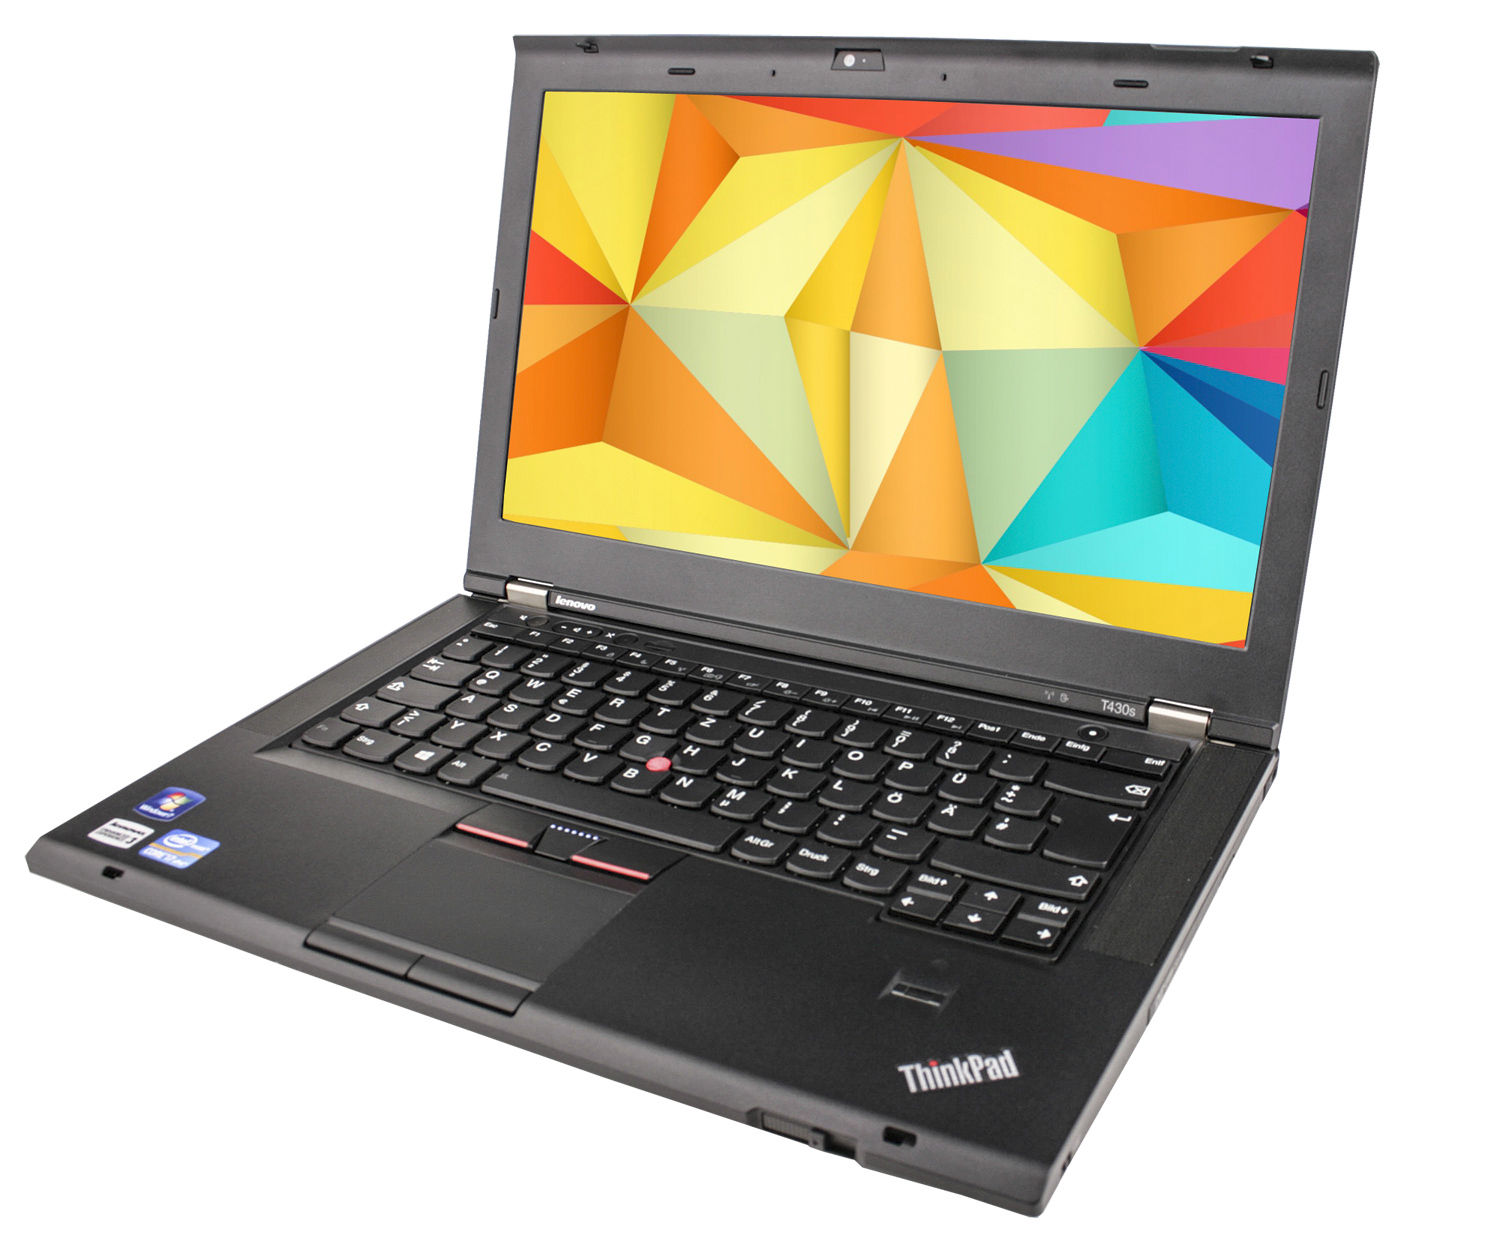 Lenovo ThinkPad T430s Core i7-3520M 2.9GHz 8GB 128GB SSD 1600x900 Win10 Webcam 